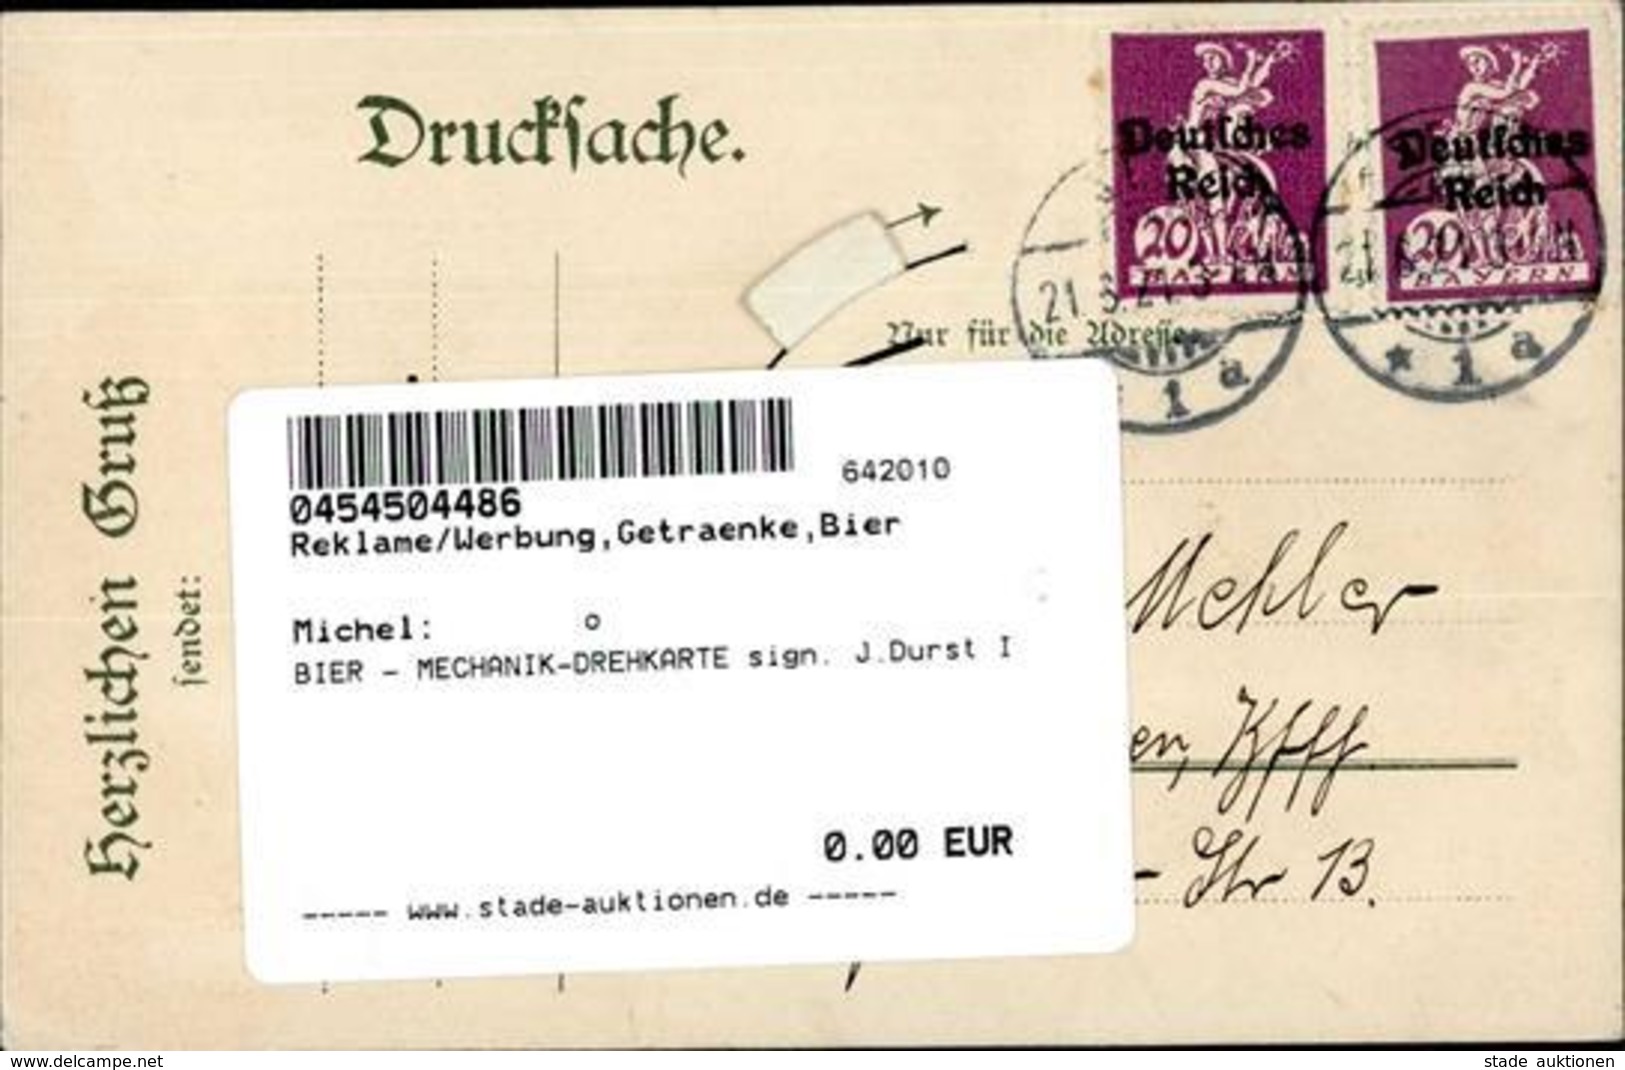 BIER - MECHANIK-DREHKARTE Sign. J.Durst I - Advertising